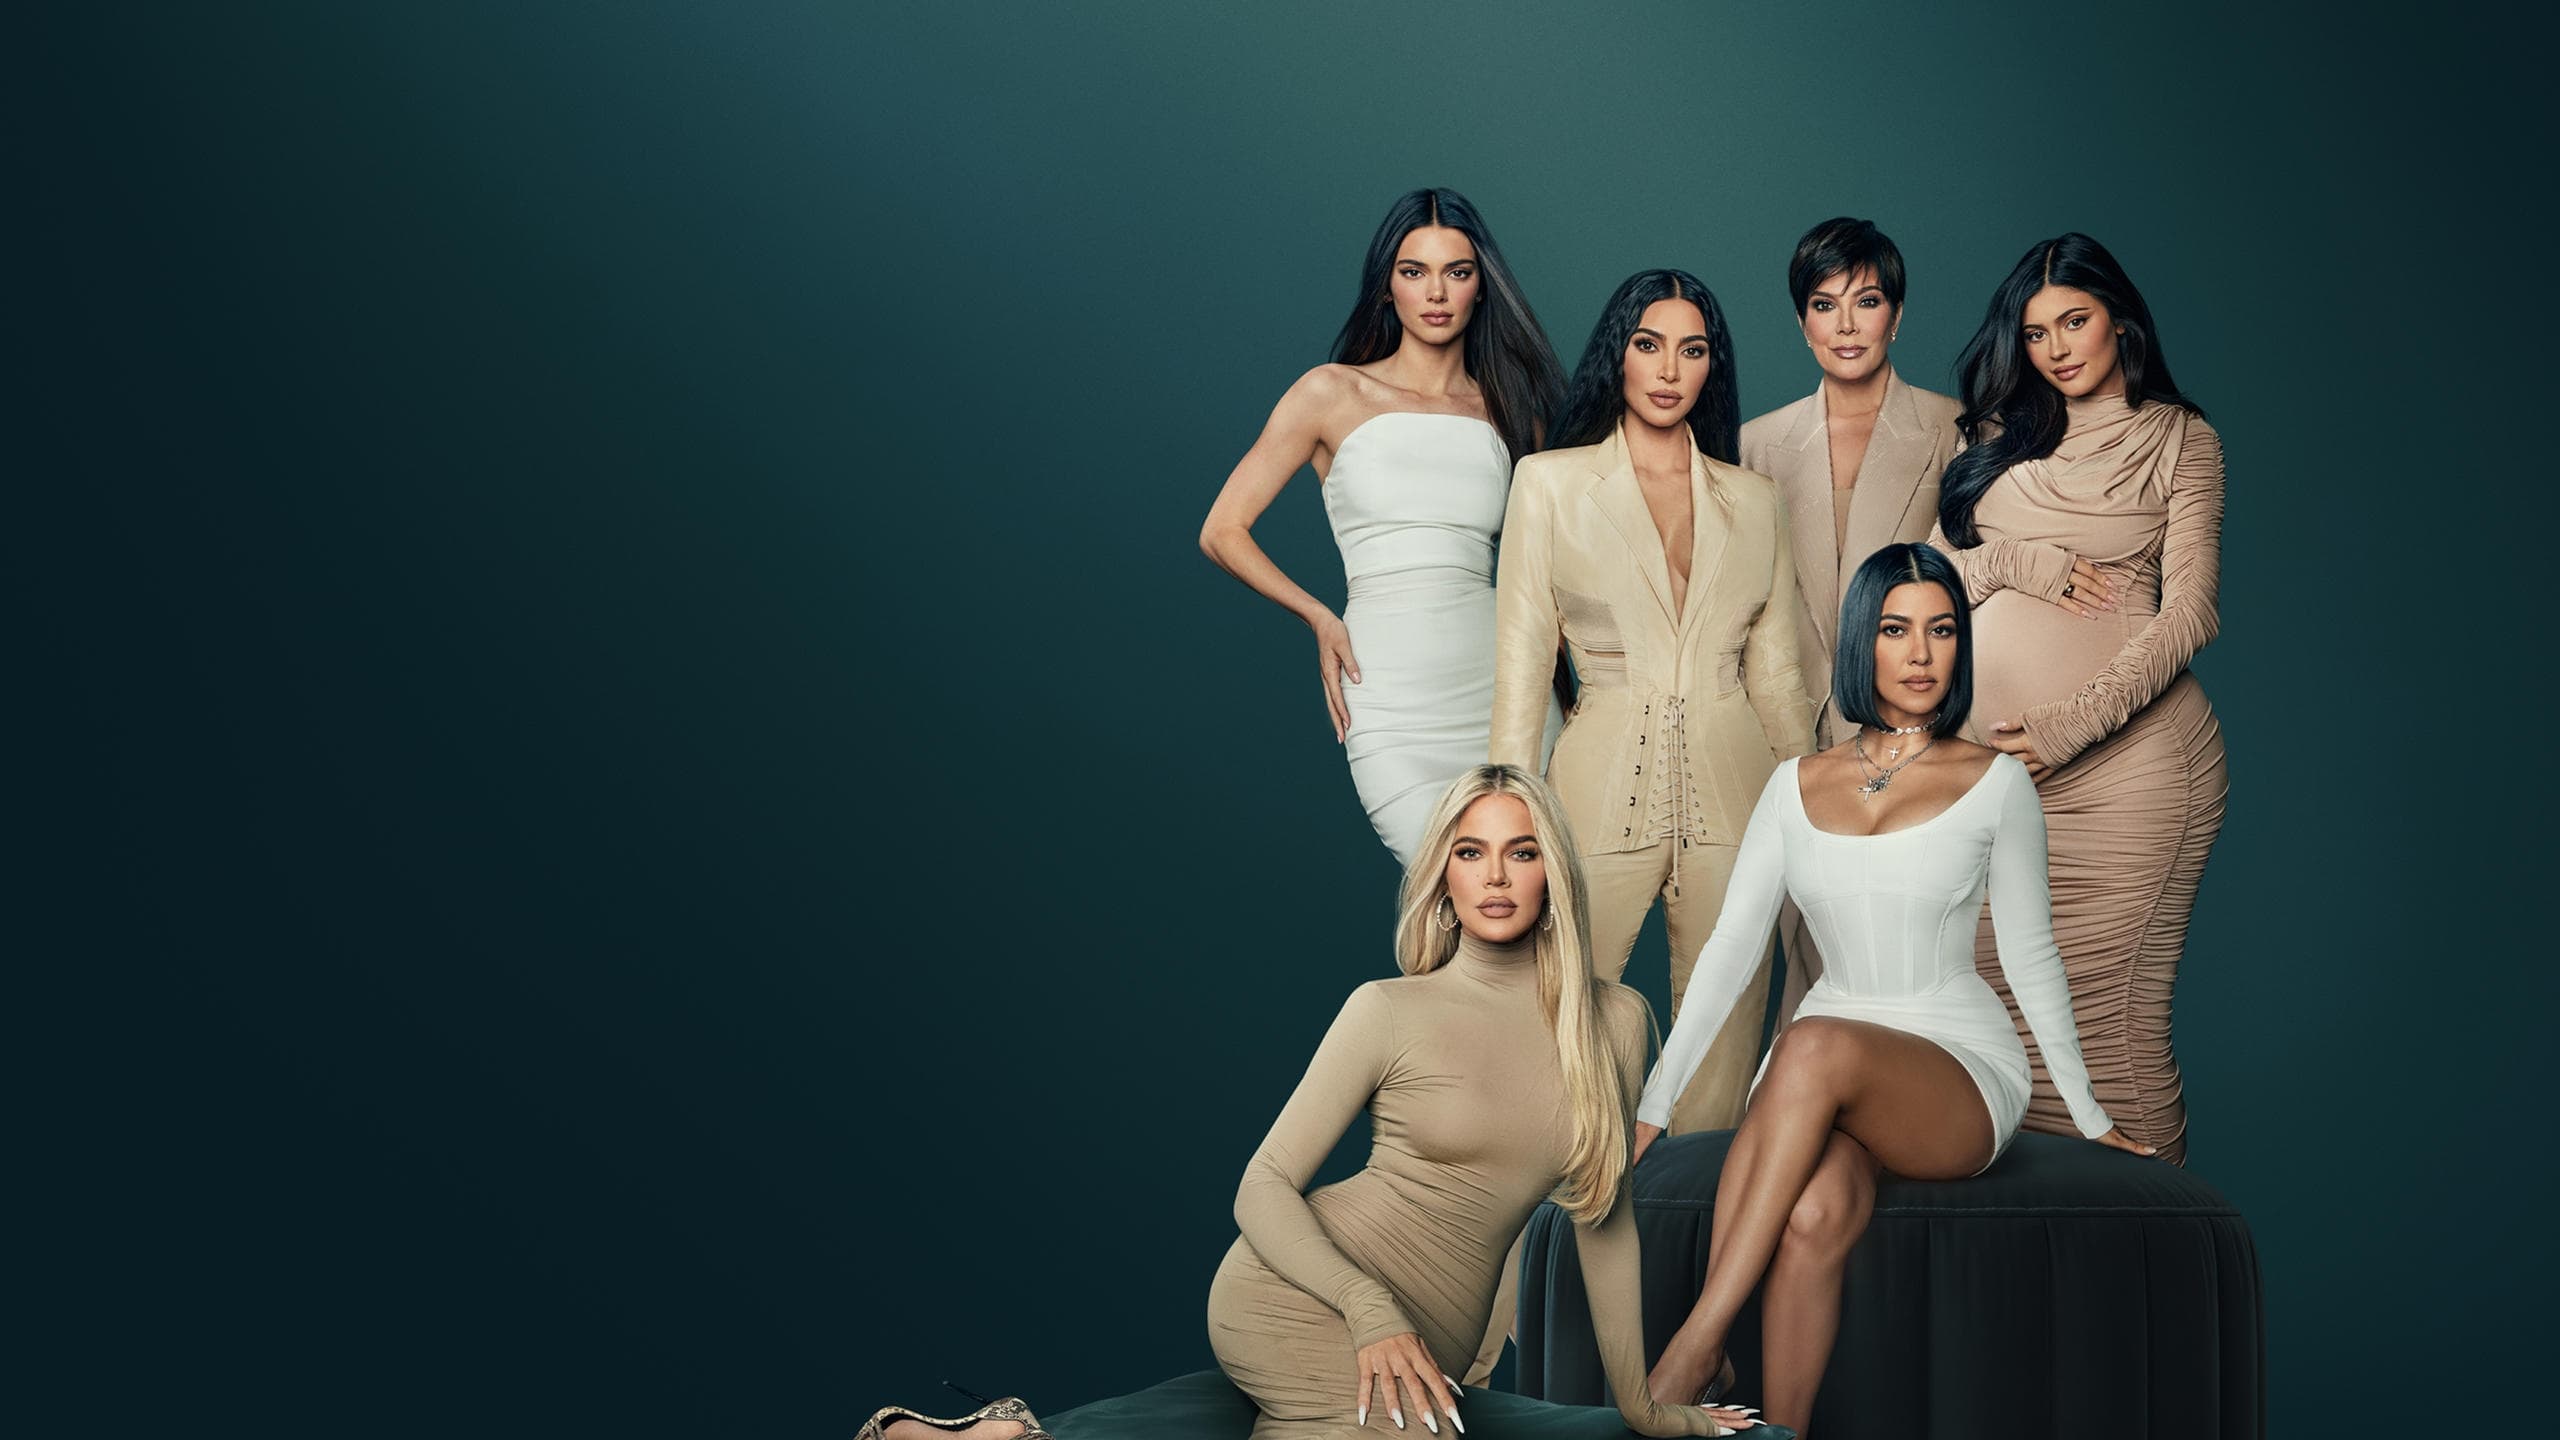 The Kardashians - Season 1 Episode 6